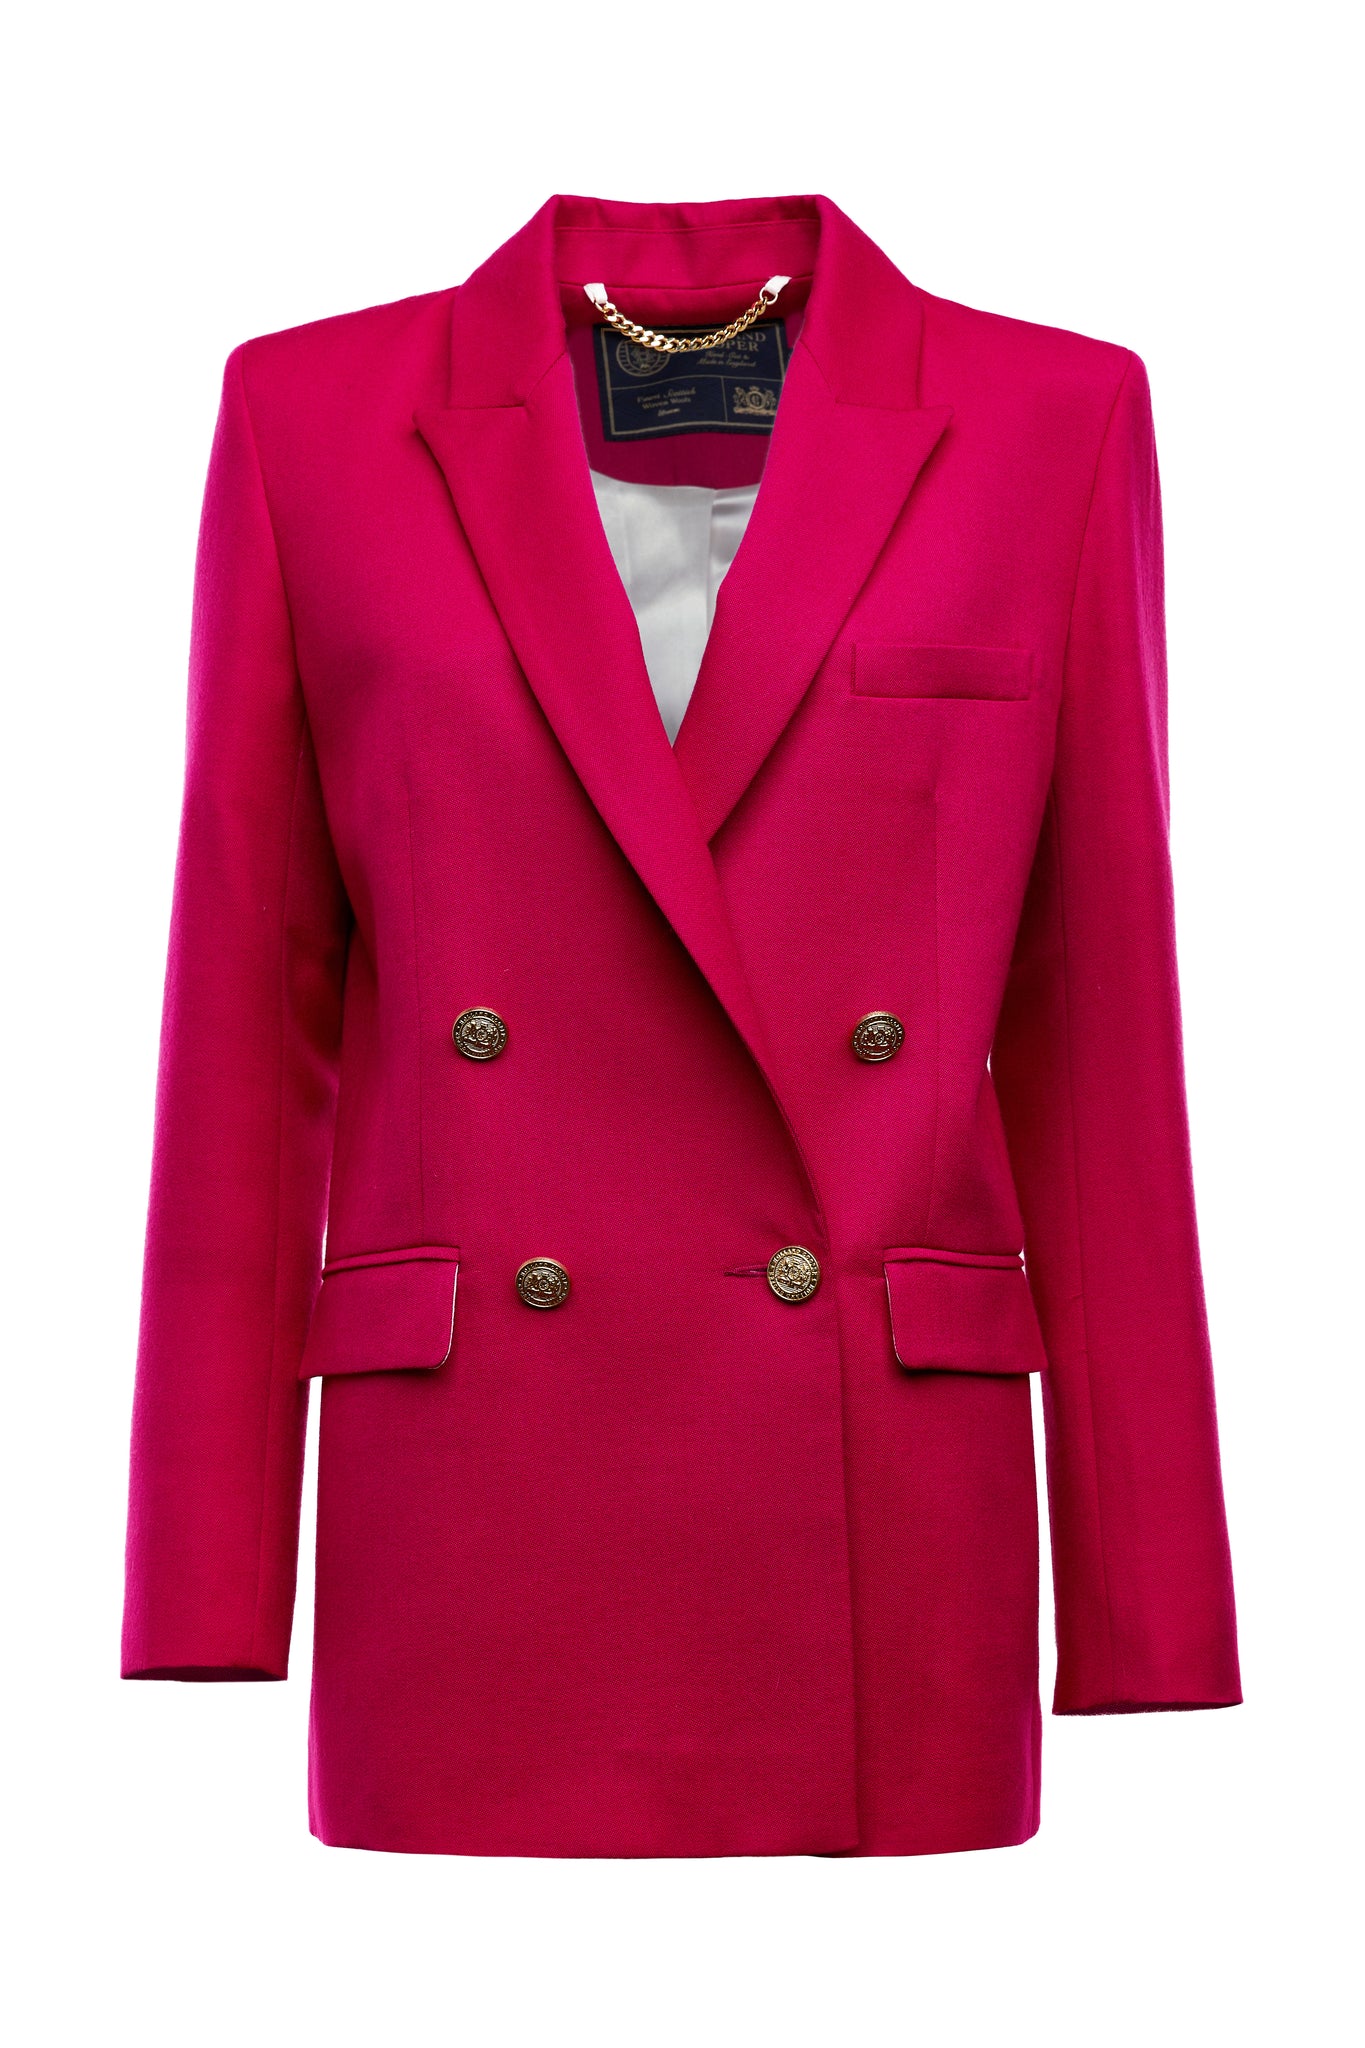 The Hot Pink Barathea Suit